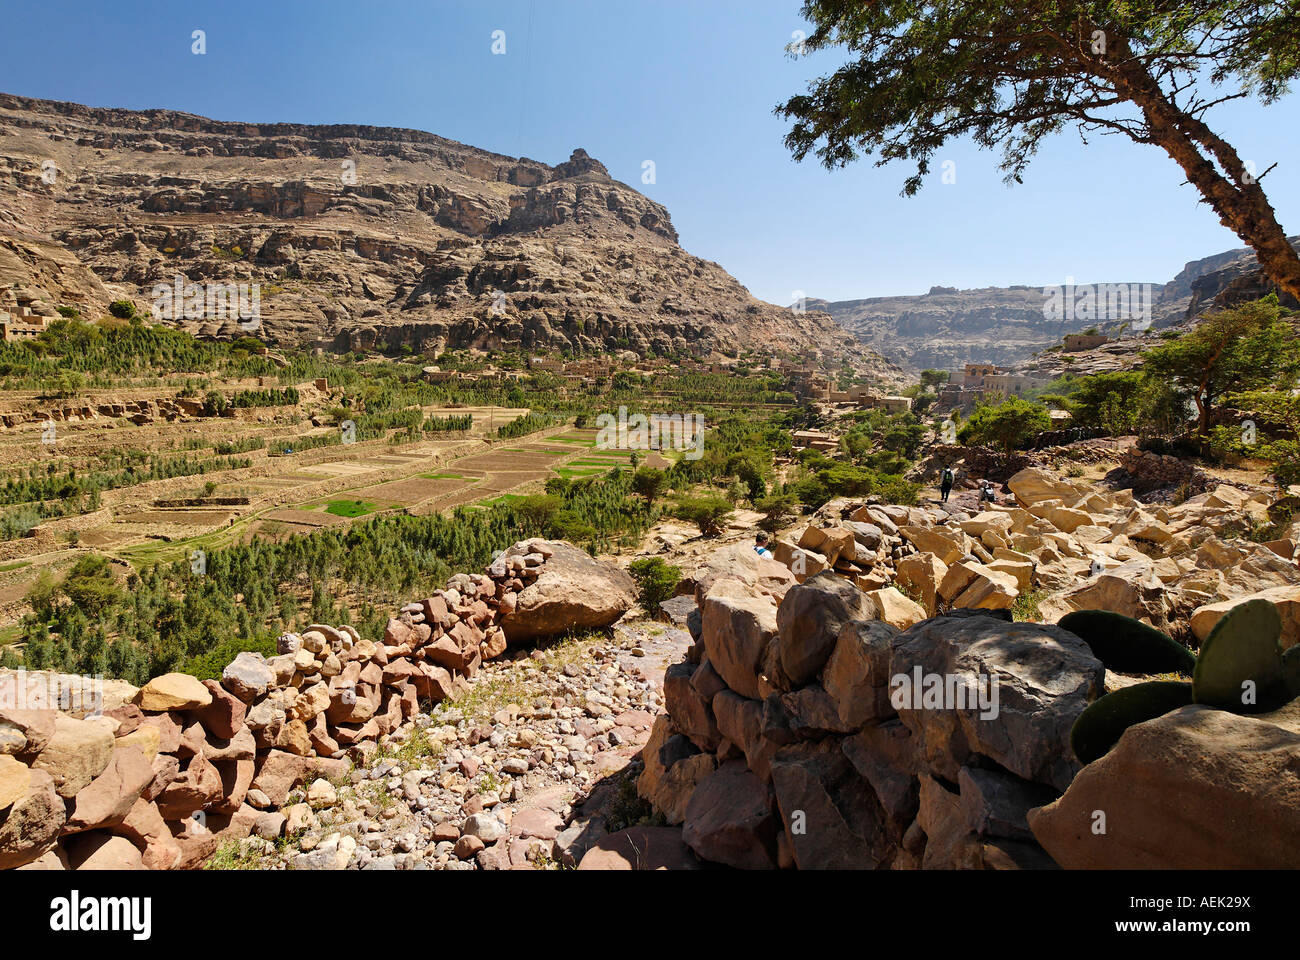 Qat plantation in the jemenian mountains, Yemen Stock Photo